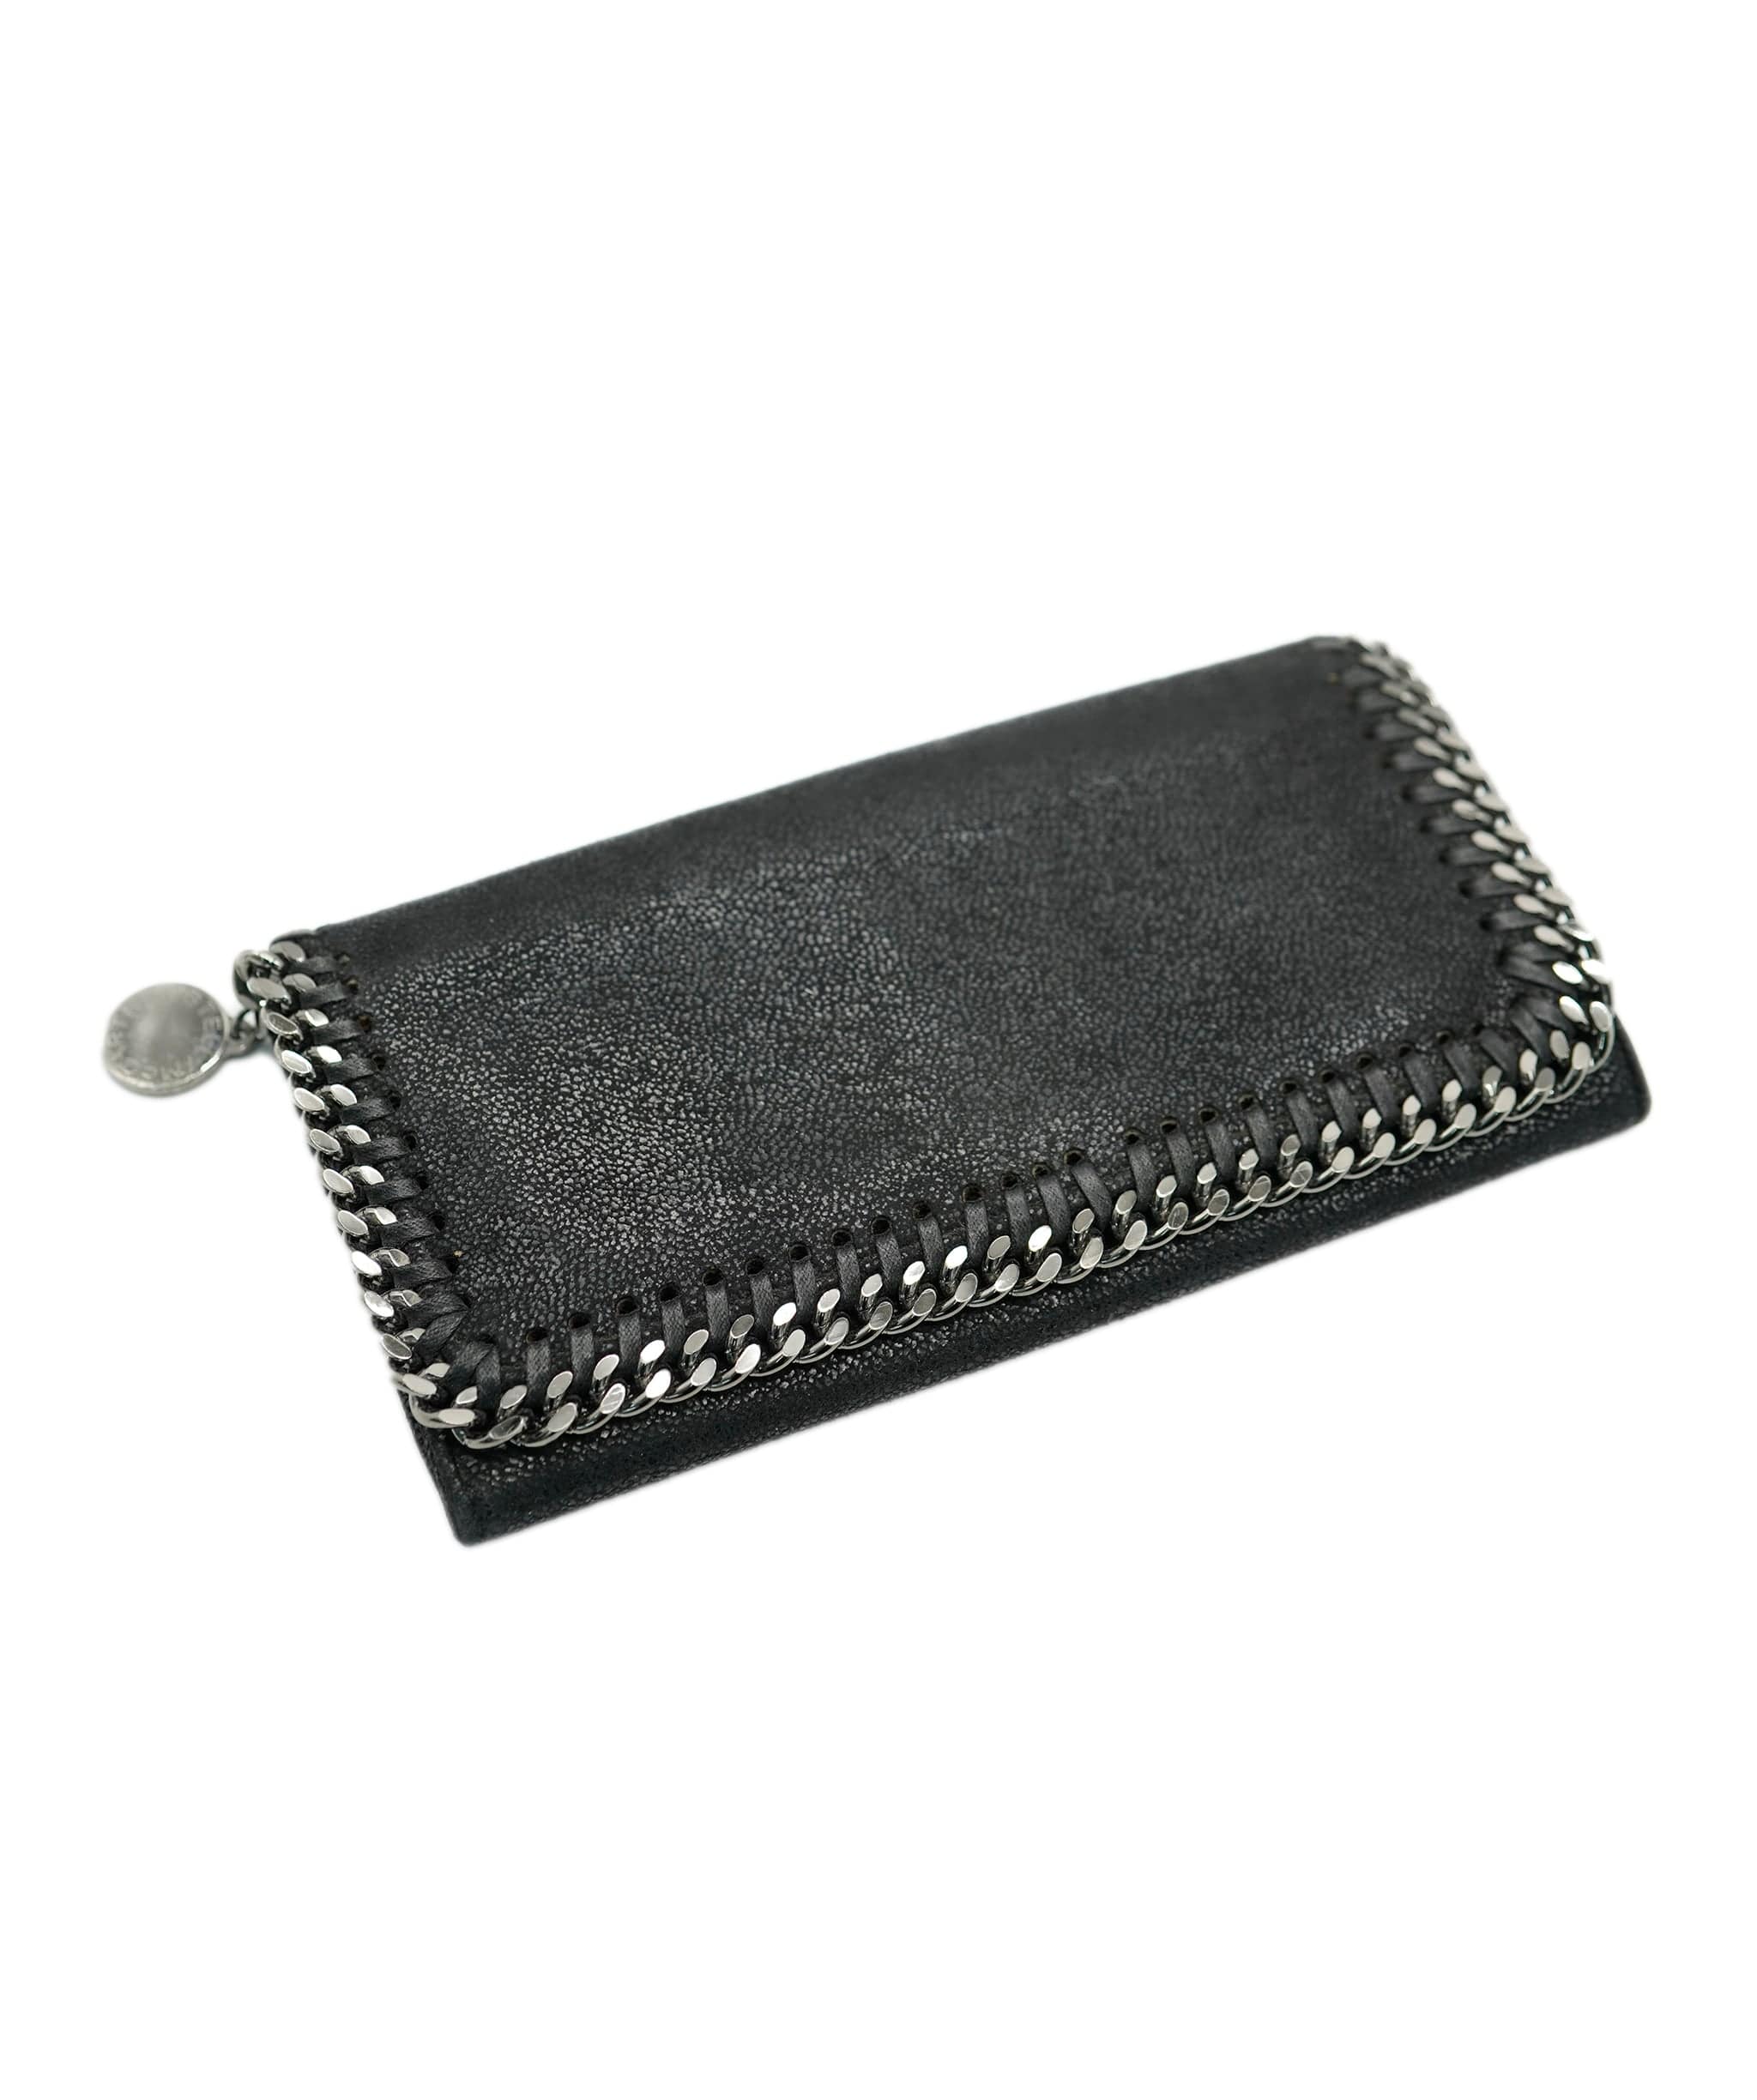 Stella McCartney Stella McCartney Black Leather Wallet